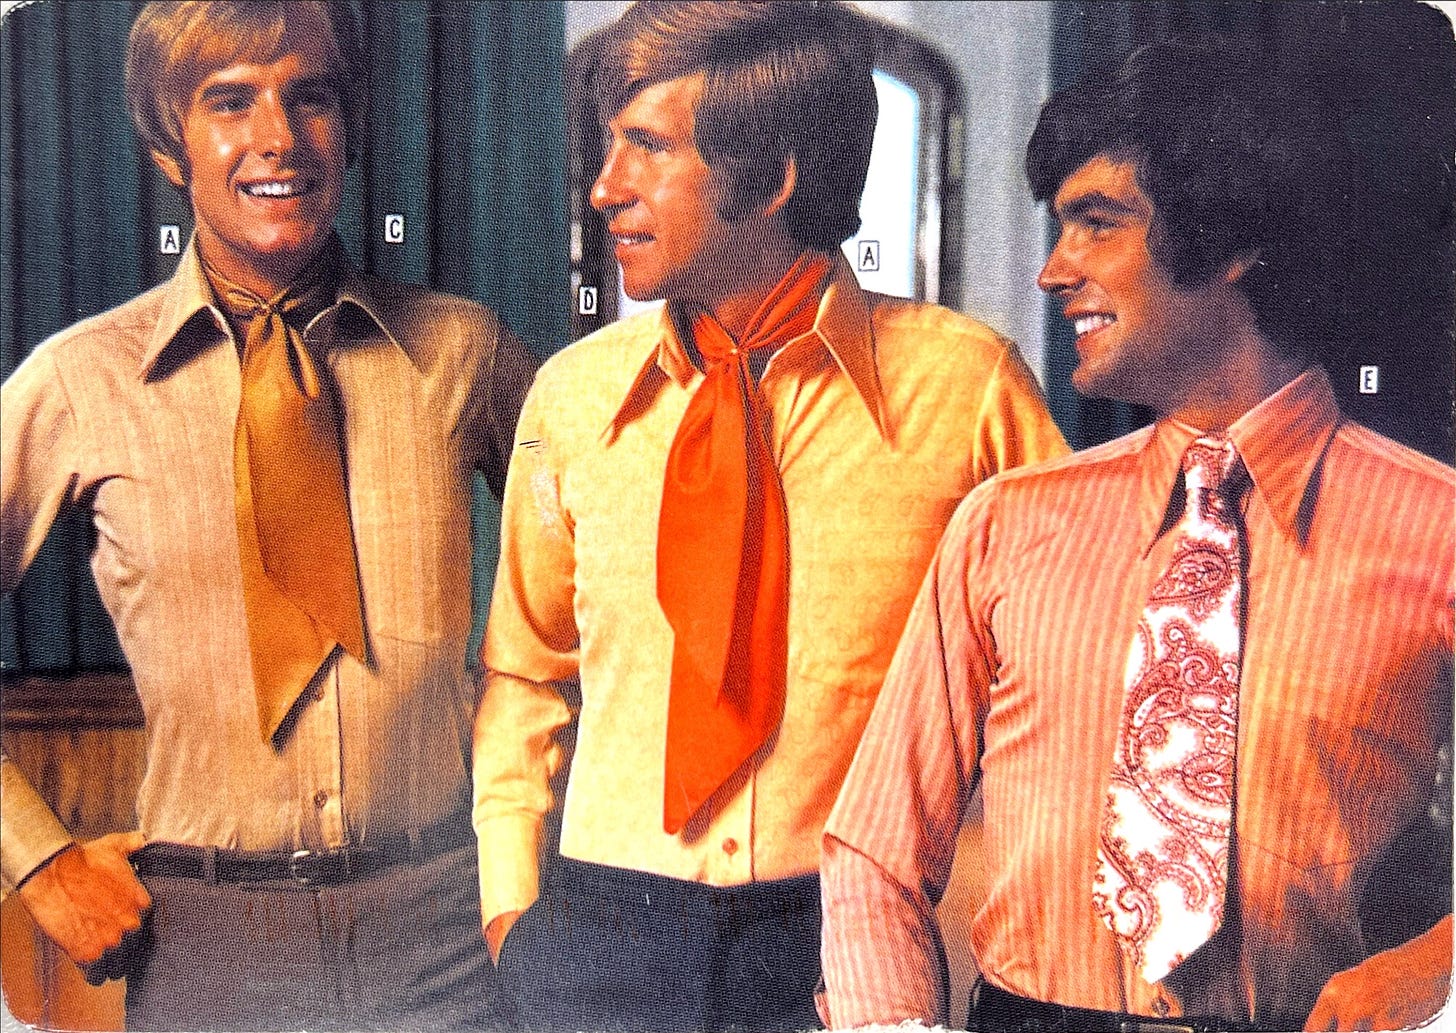 Photo of three 1970s looking guys in ties.